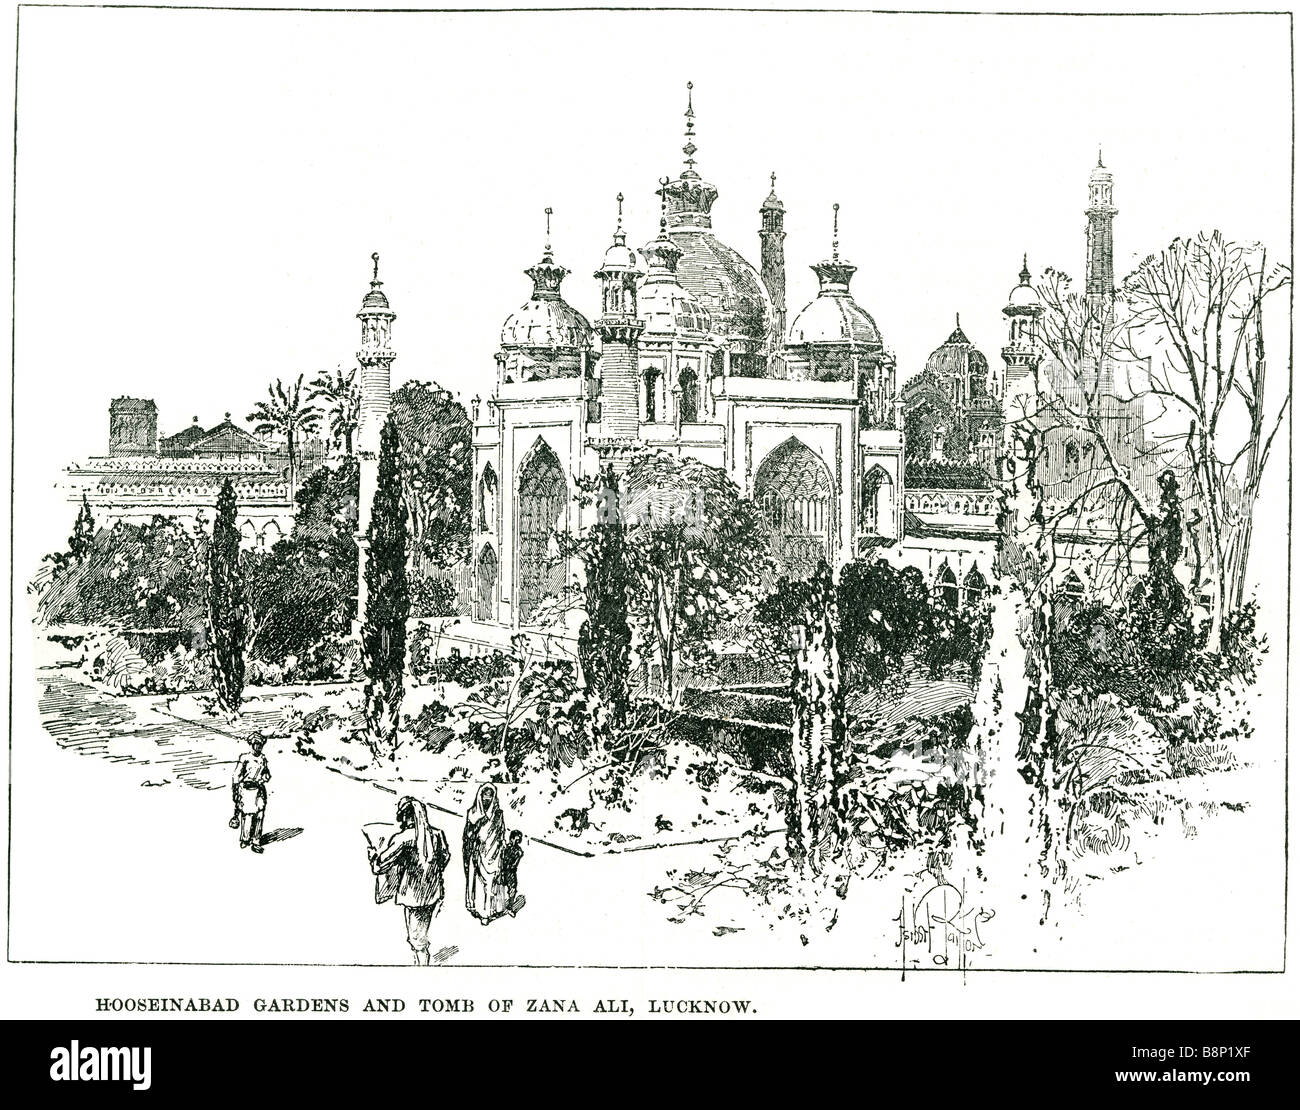 Giardini hooseinabad tomba zana ali Lucknow ribellione indiana del 1857 Foto Stock